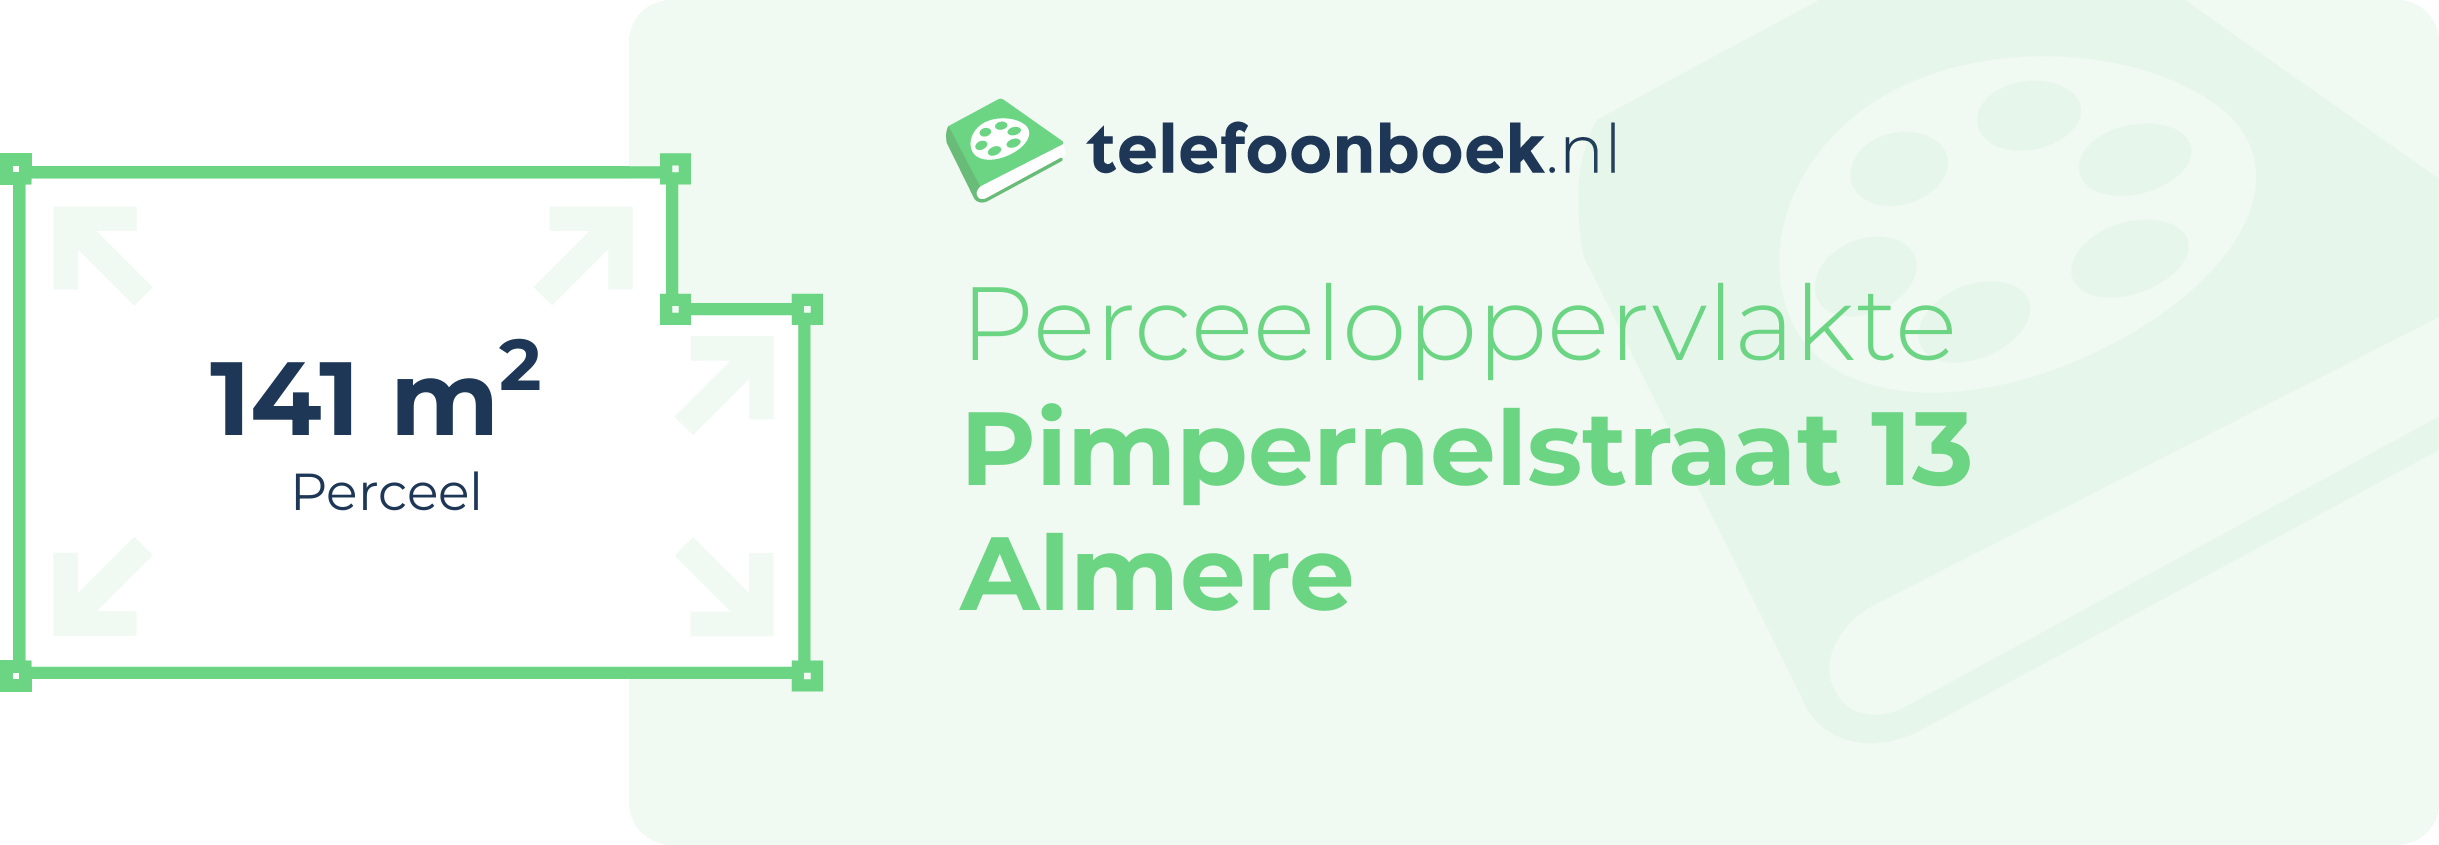 Perceeloppervlakte Pimpernelstraat 13 Almere